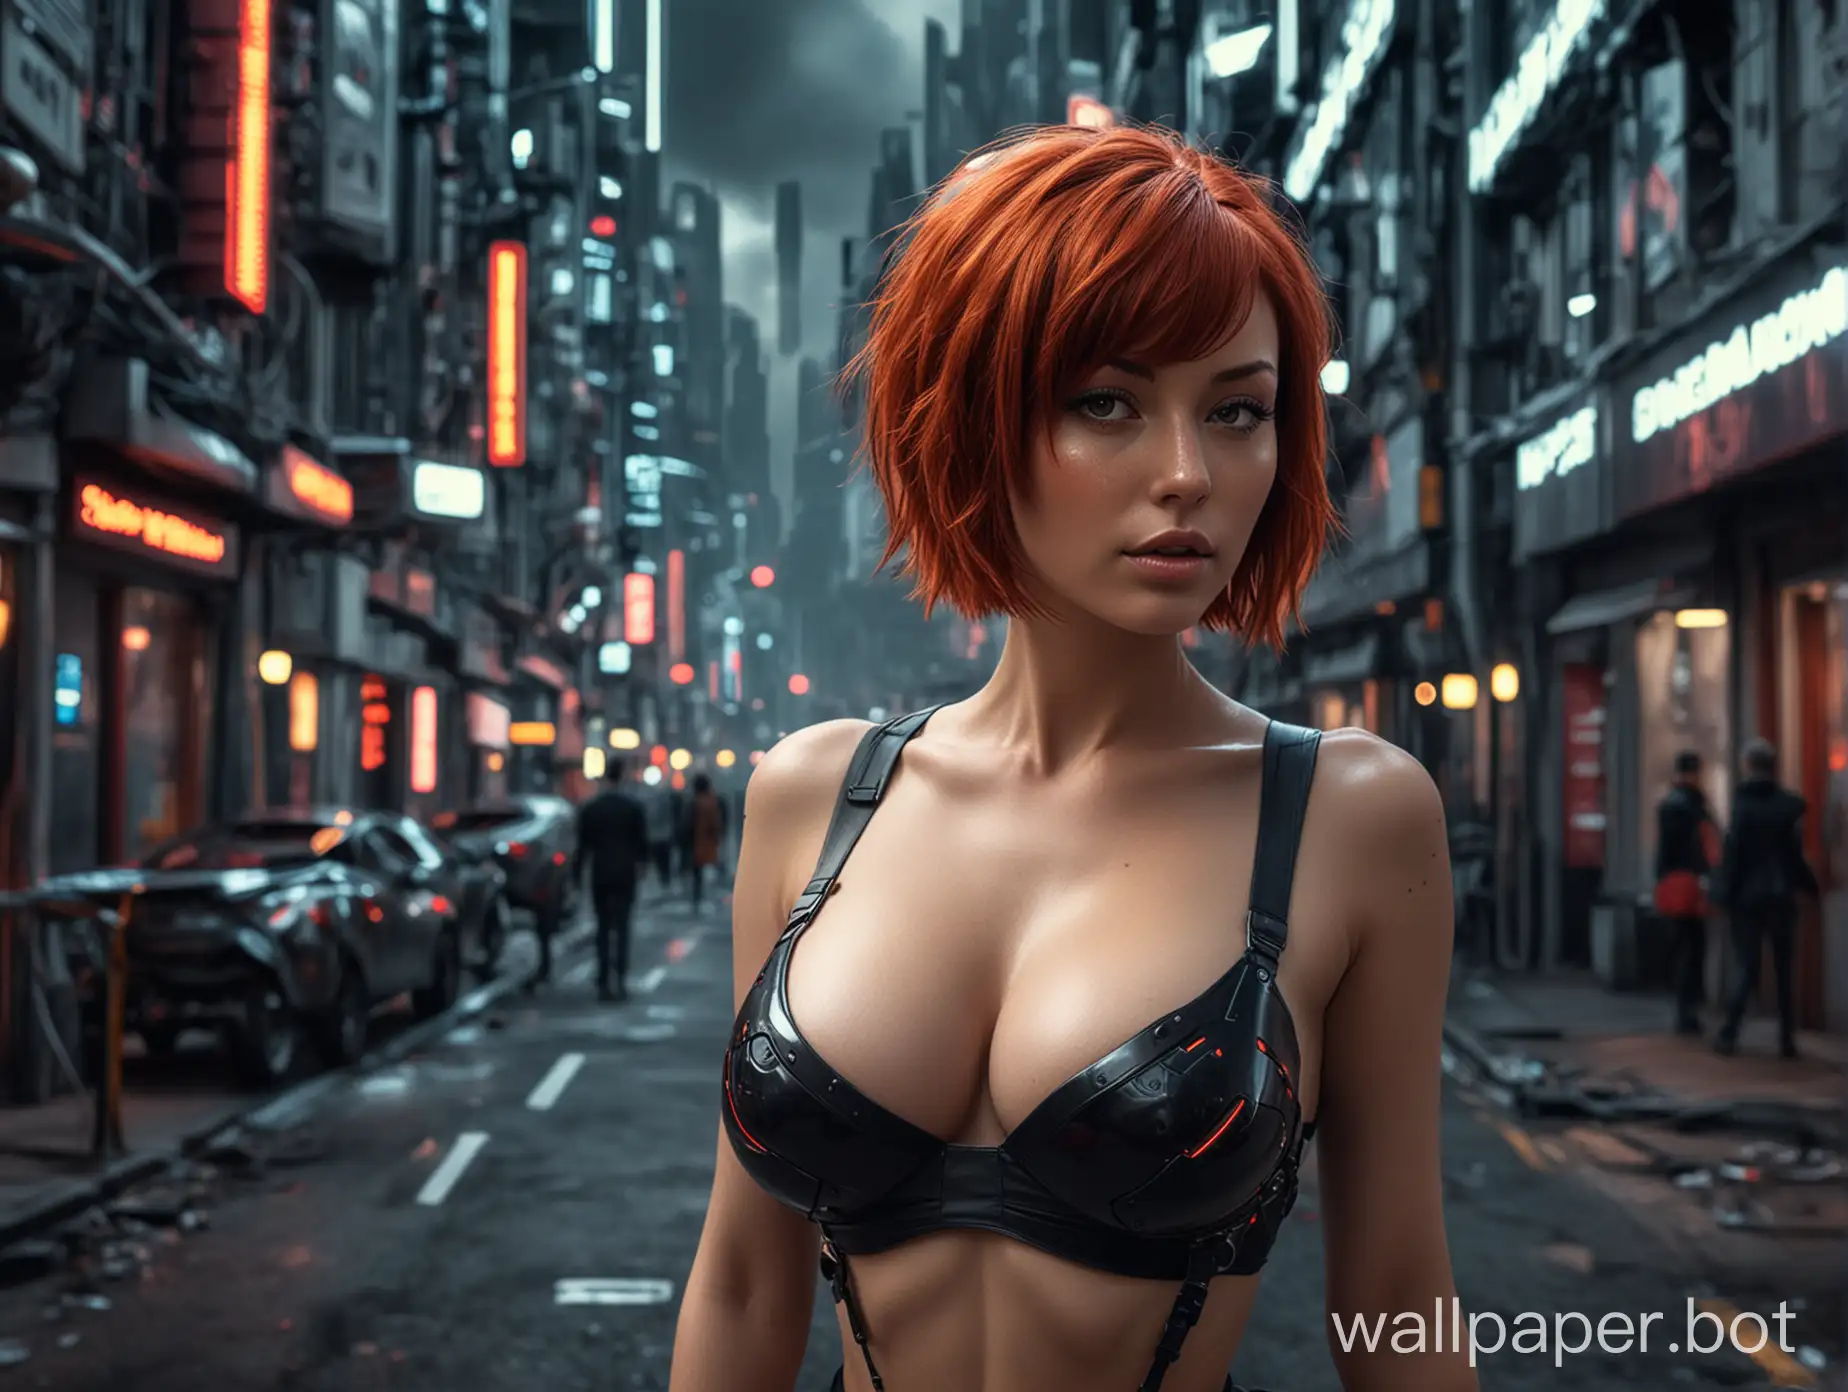 Futuristic-Cyberpunk-Cityscape-RedHaired-Woman-in-Urban-Fantasy-Setting